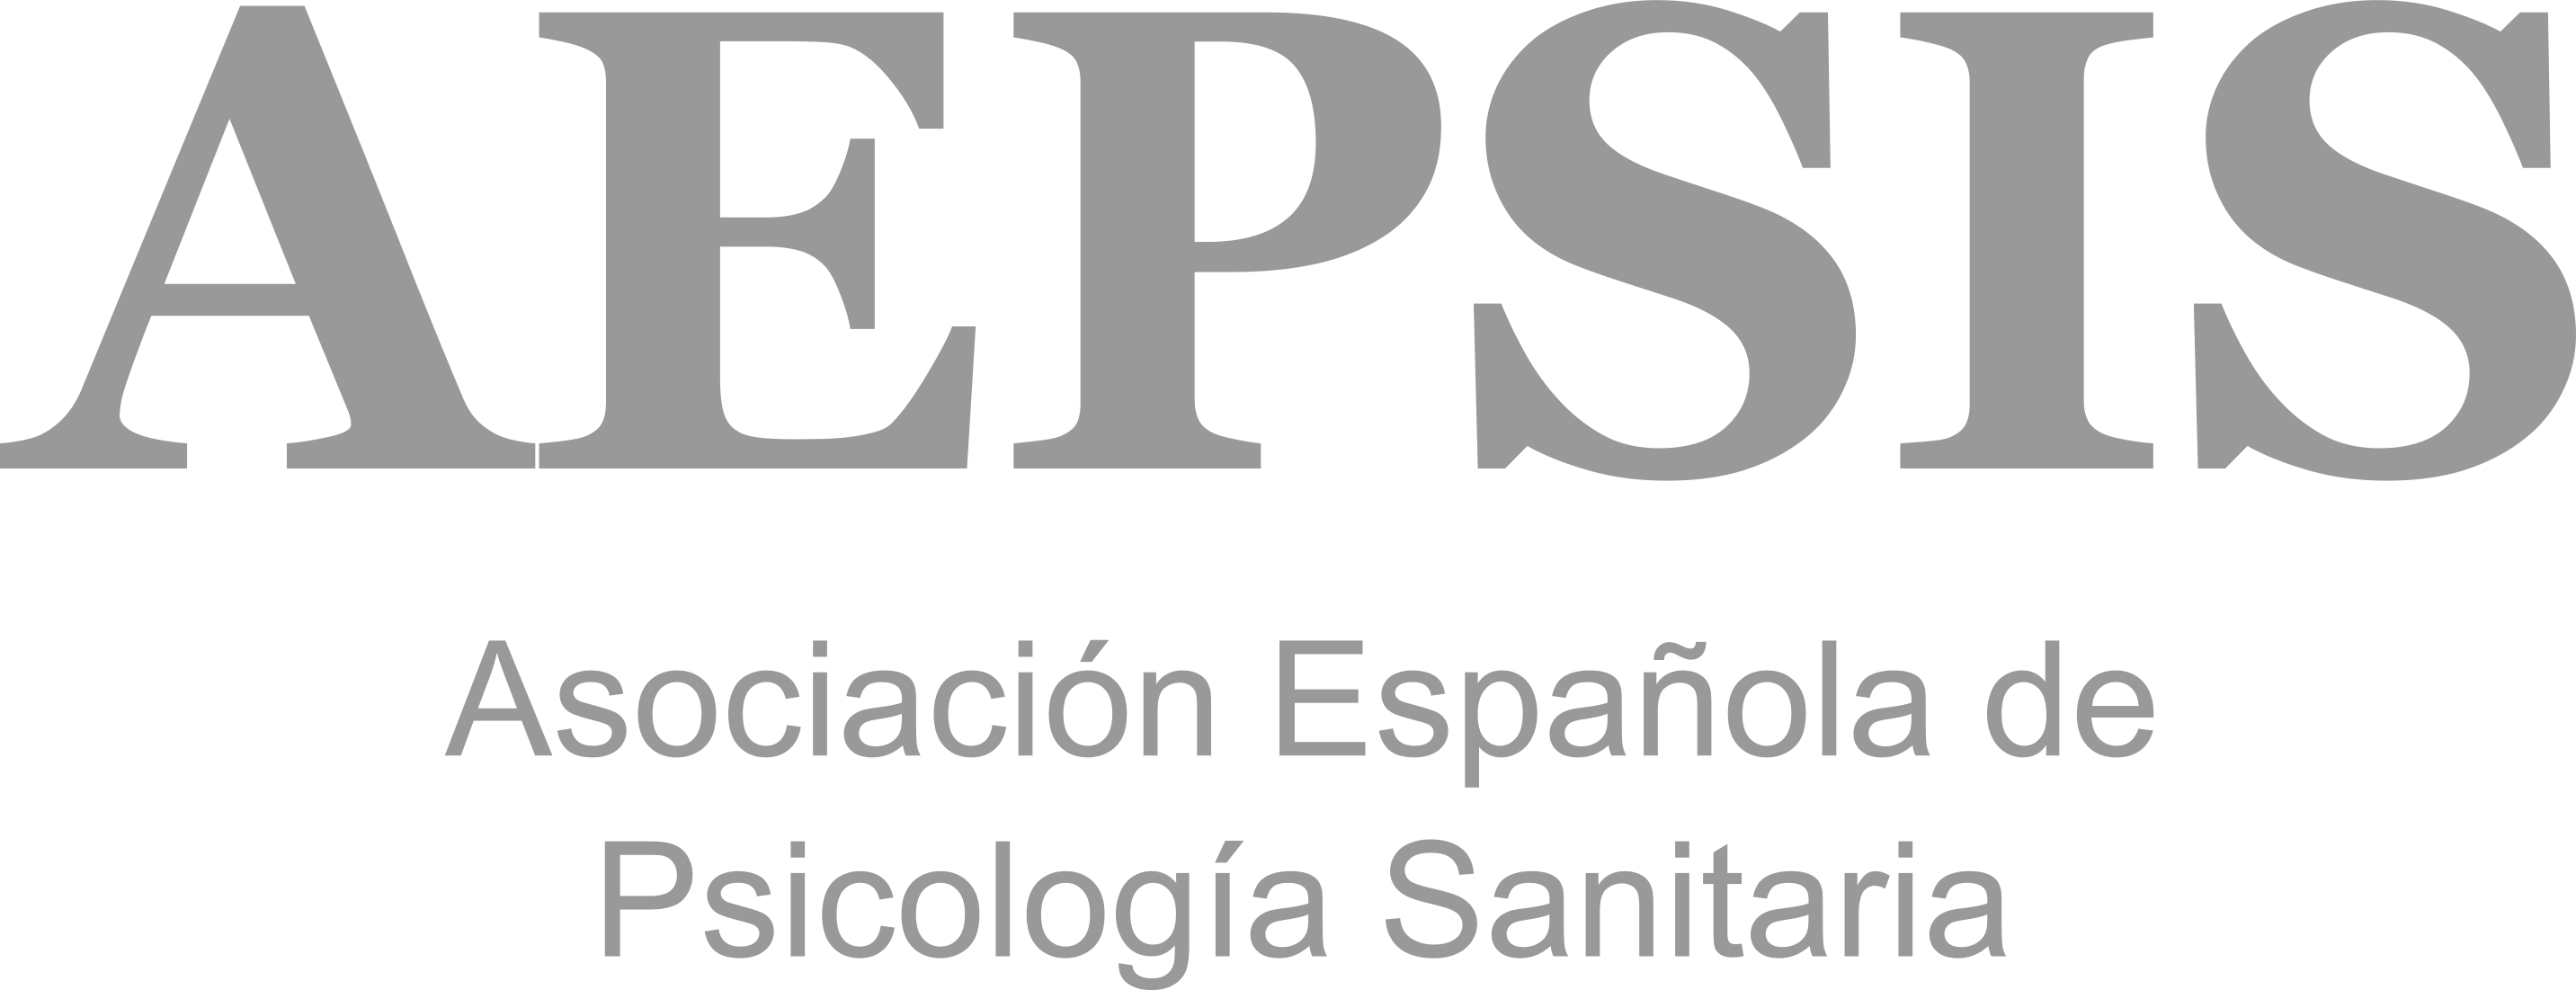 Logo AEPSIS, Asociación Española de Psicología Sanitaria